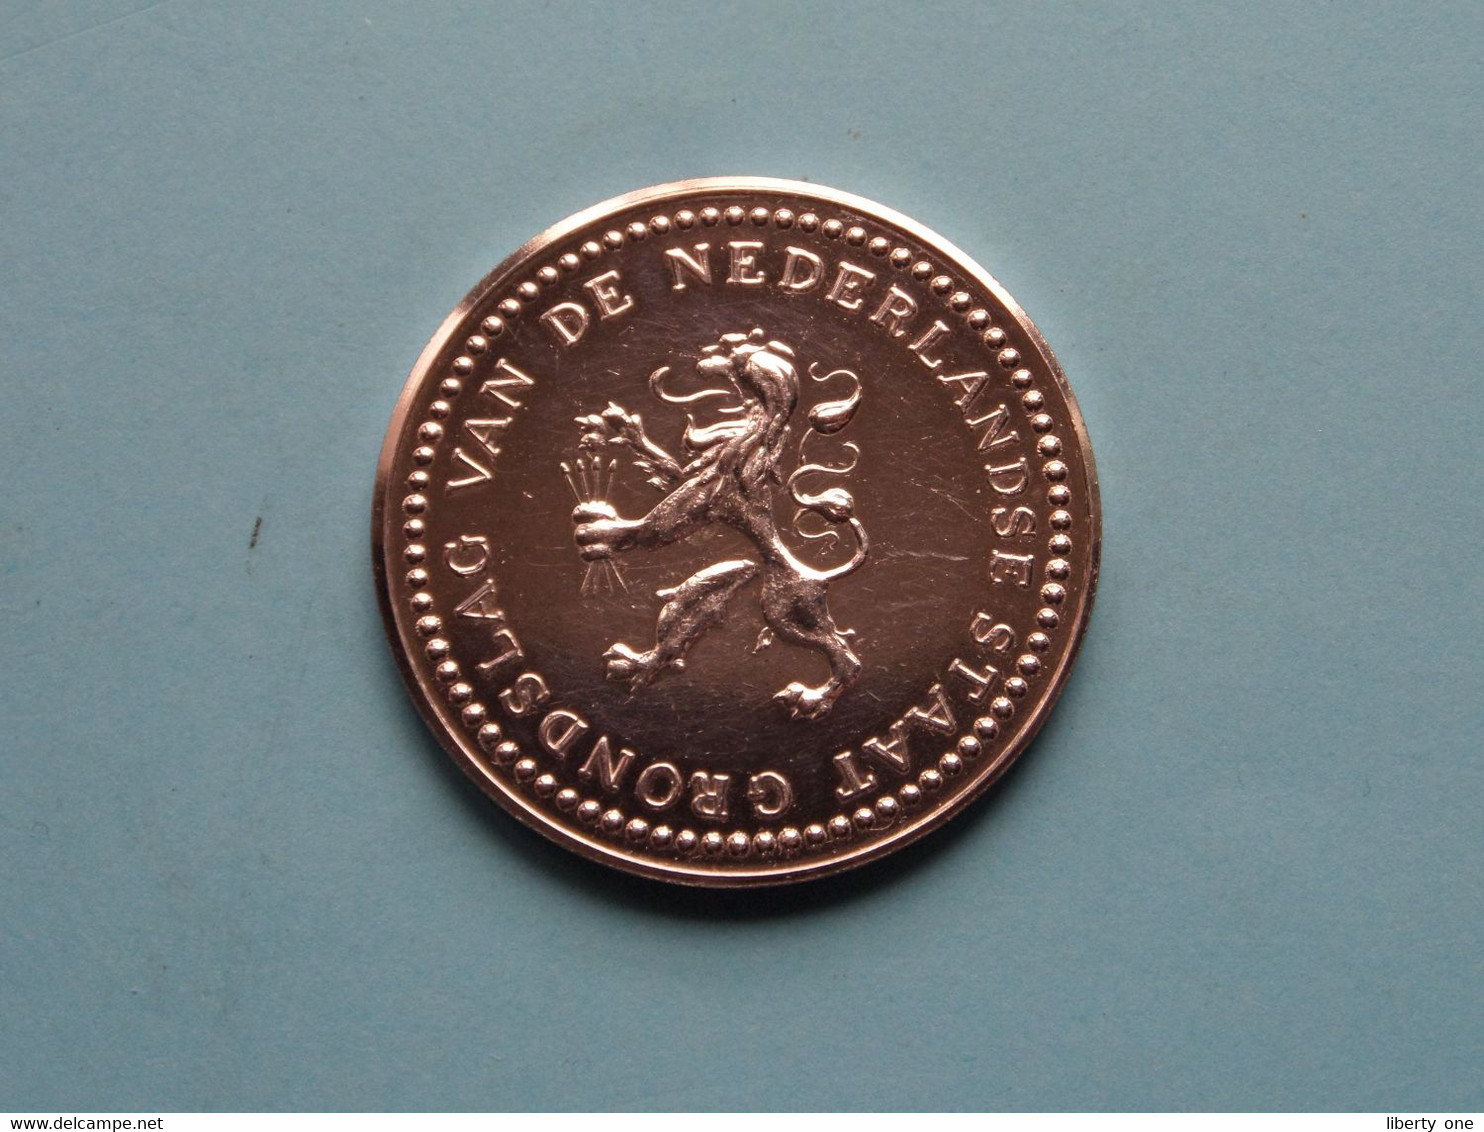 23 JANUARI 1579 - GRONDSLAG VAN DE NEDERLANDSE STAAT ( See SCANS ) 38 Mm.! - Souvenir-Medaille (elongated Coins)